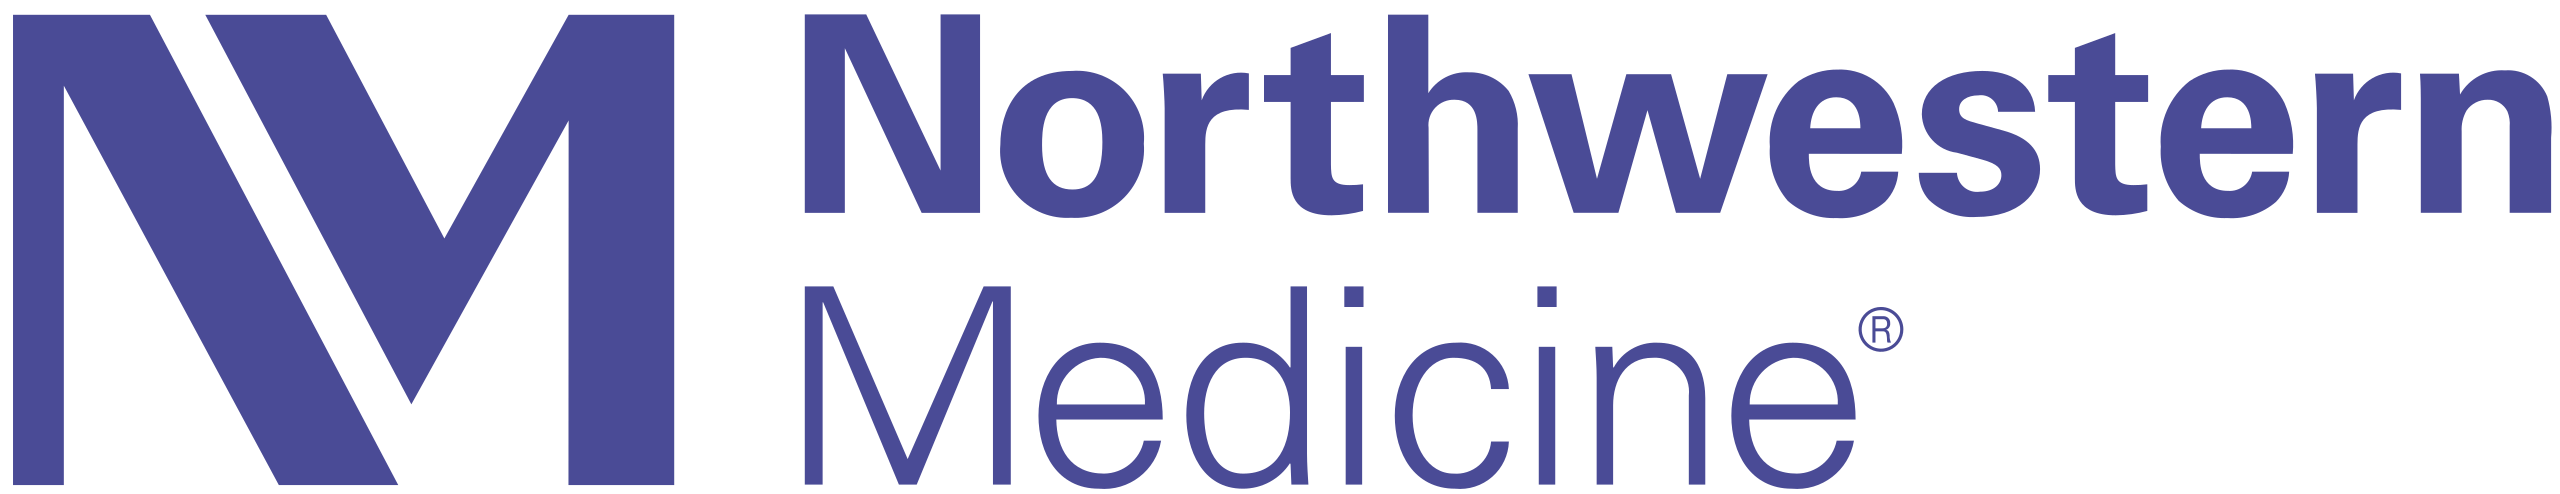 northwestern-medicine